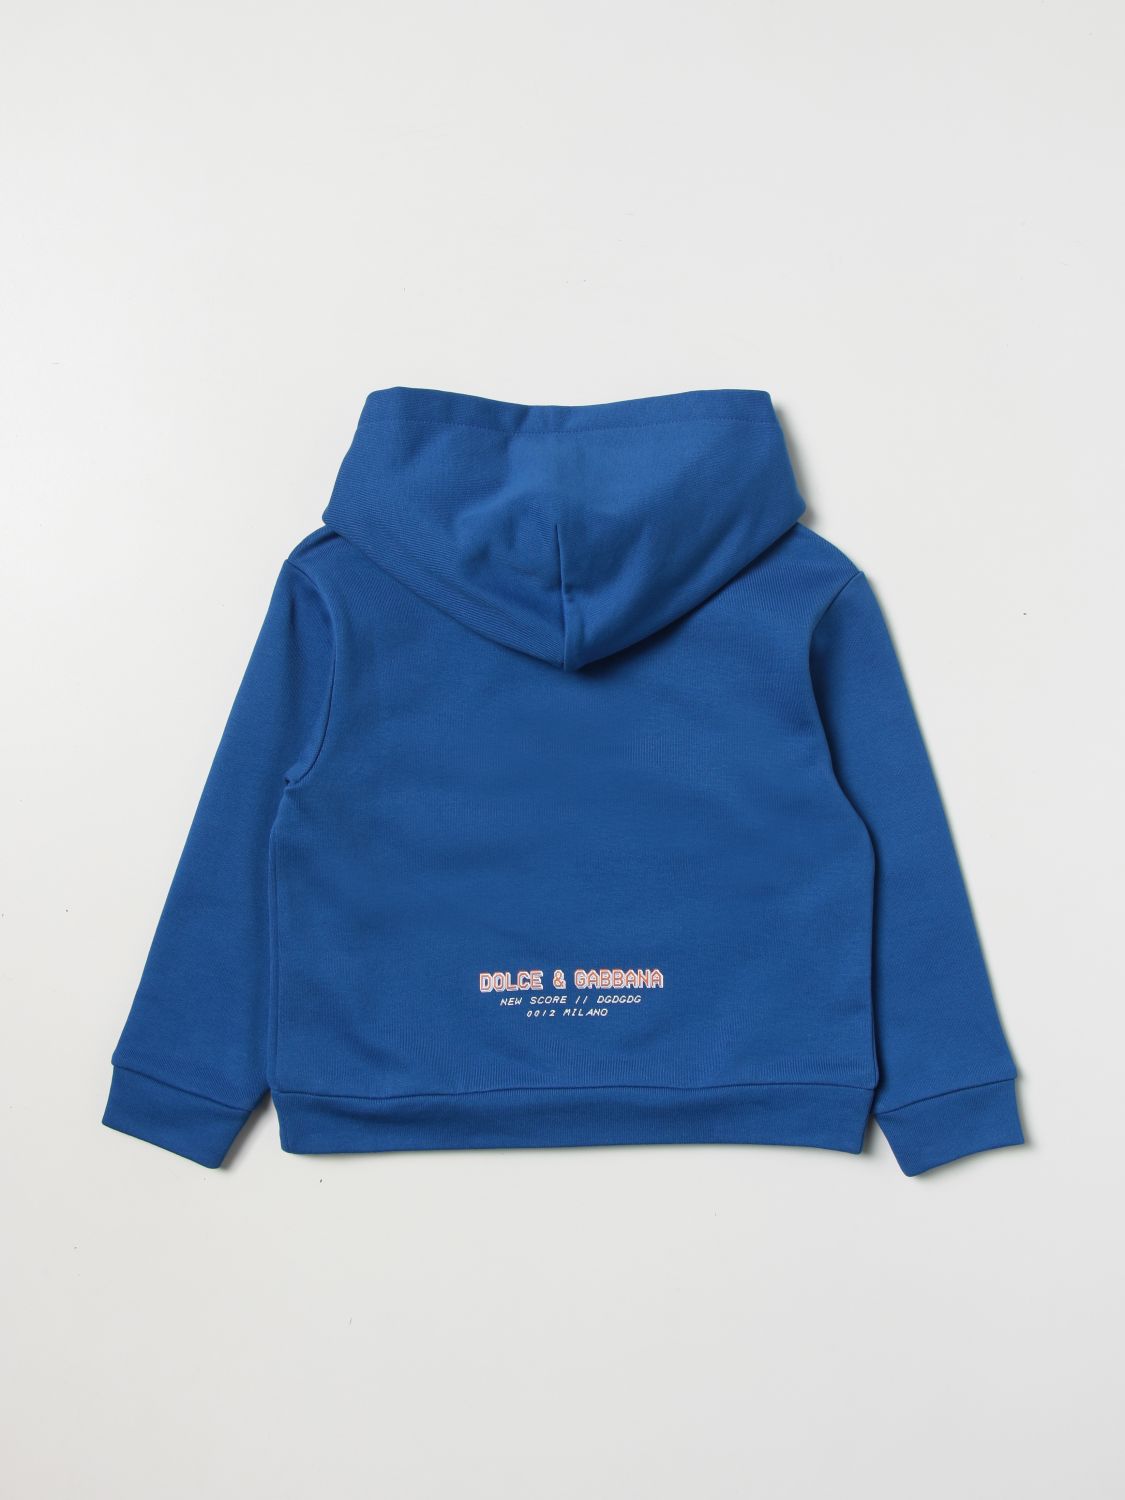 DOLCE & GABBANA: sweater for boys - Blue | Dolce & Gabbana sweater  L4JWEBG7HLT online on 